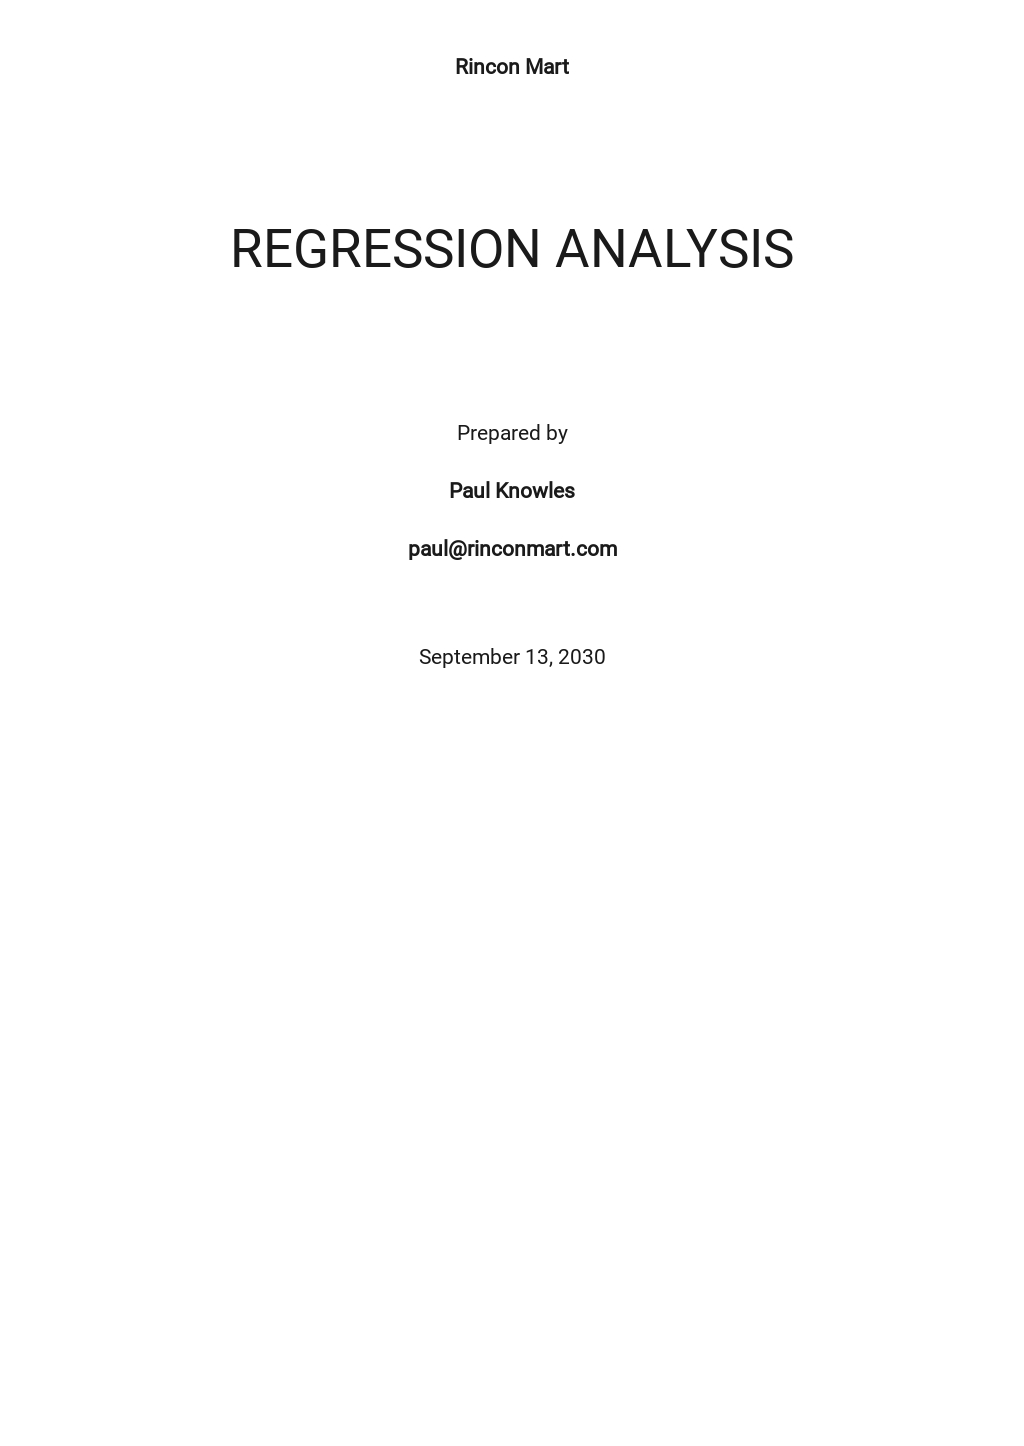 Regression Analysis Template.jpe